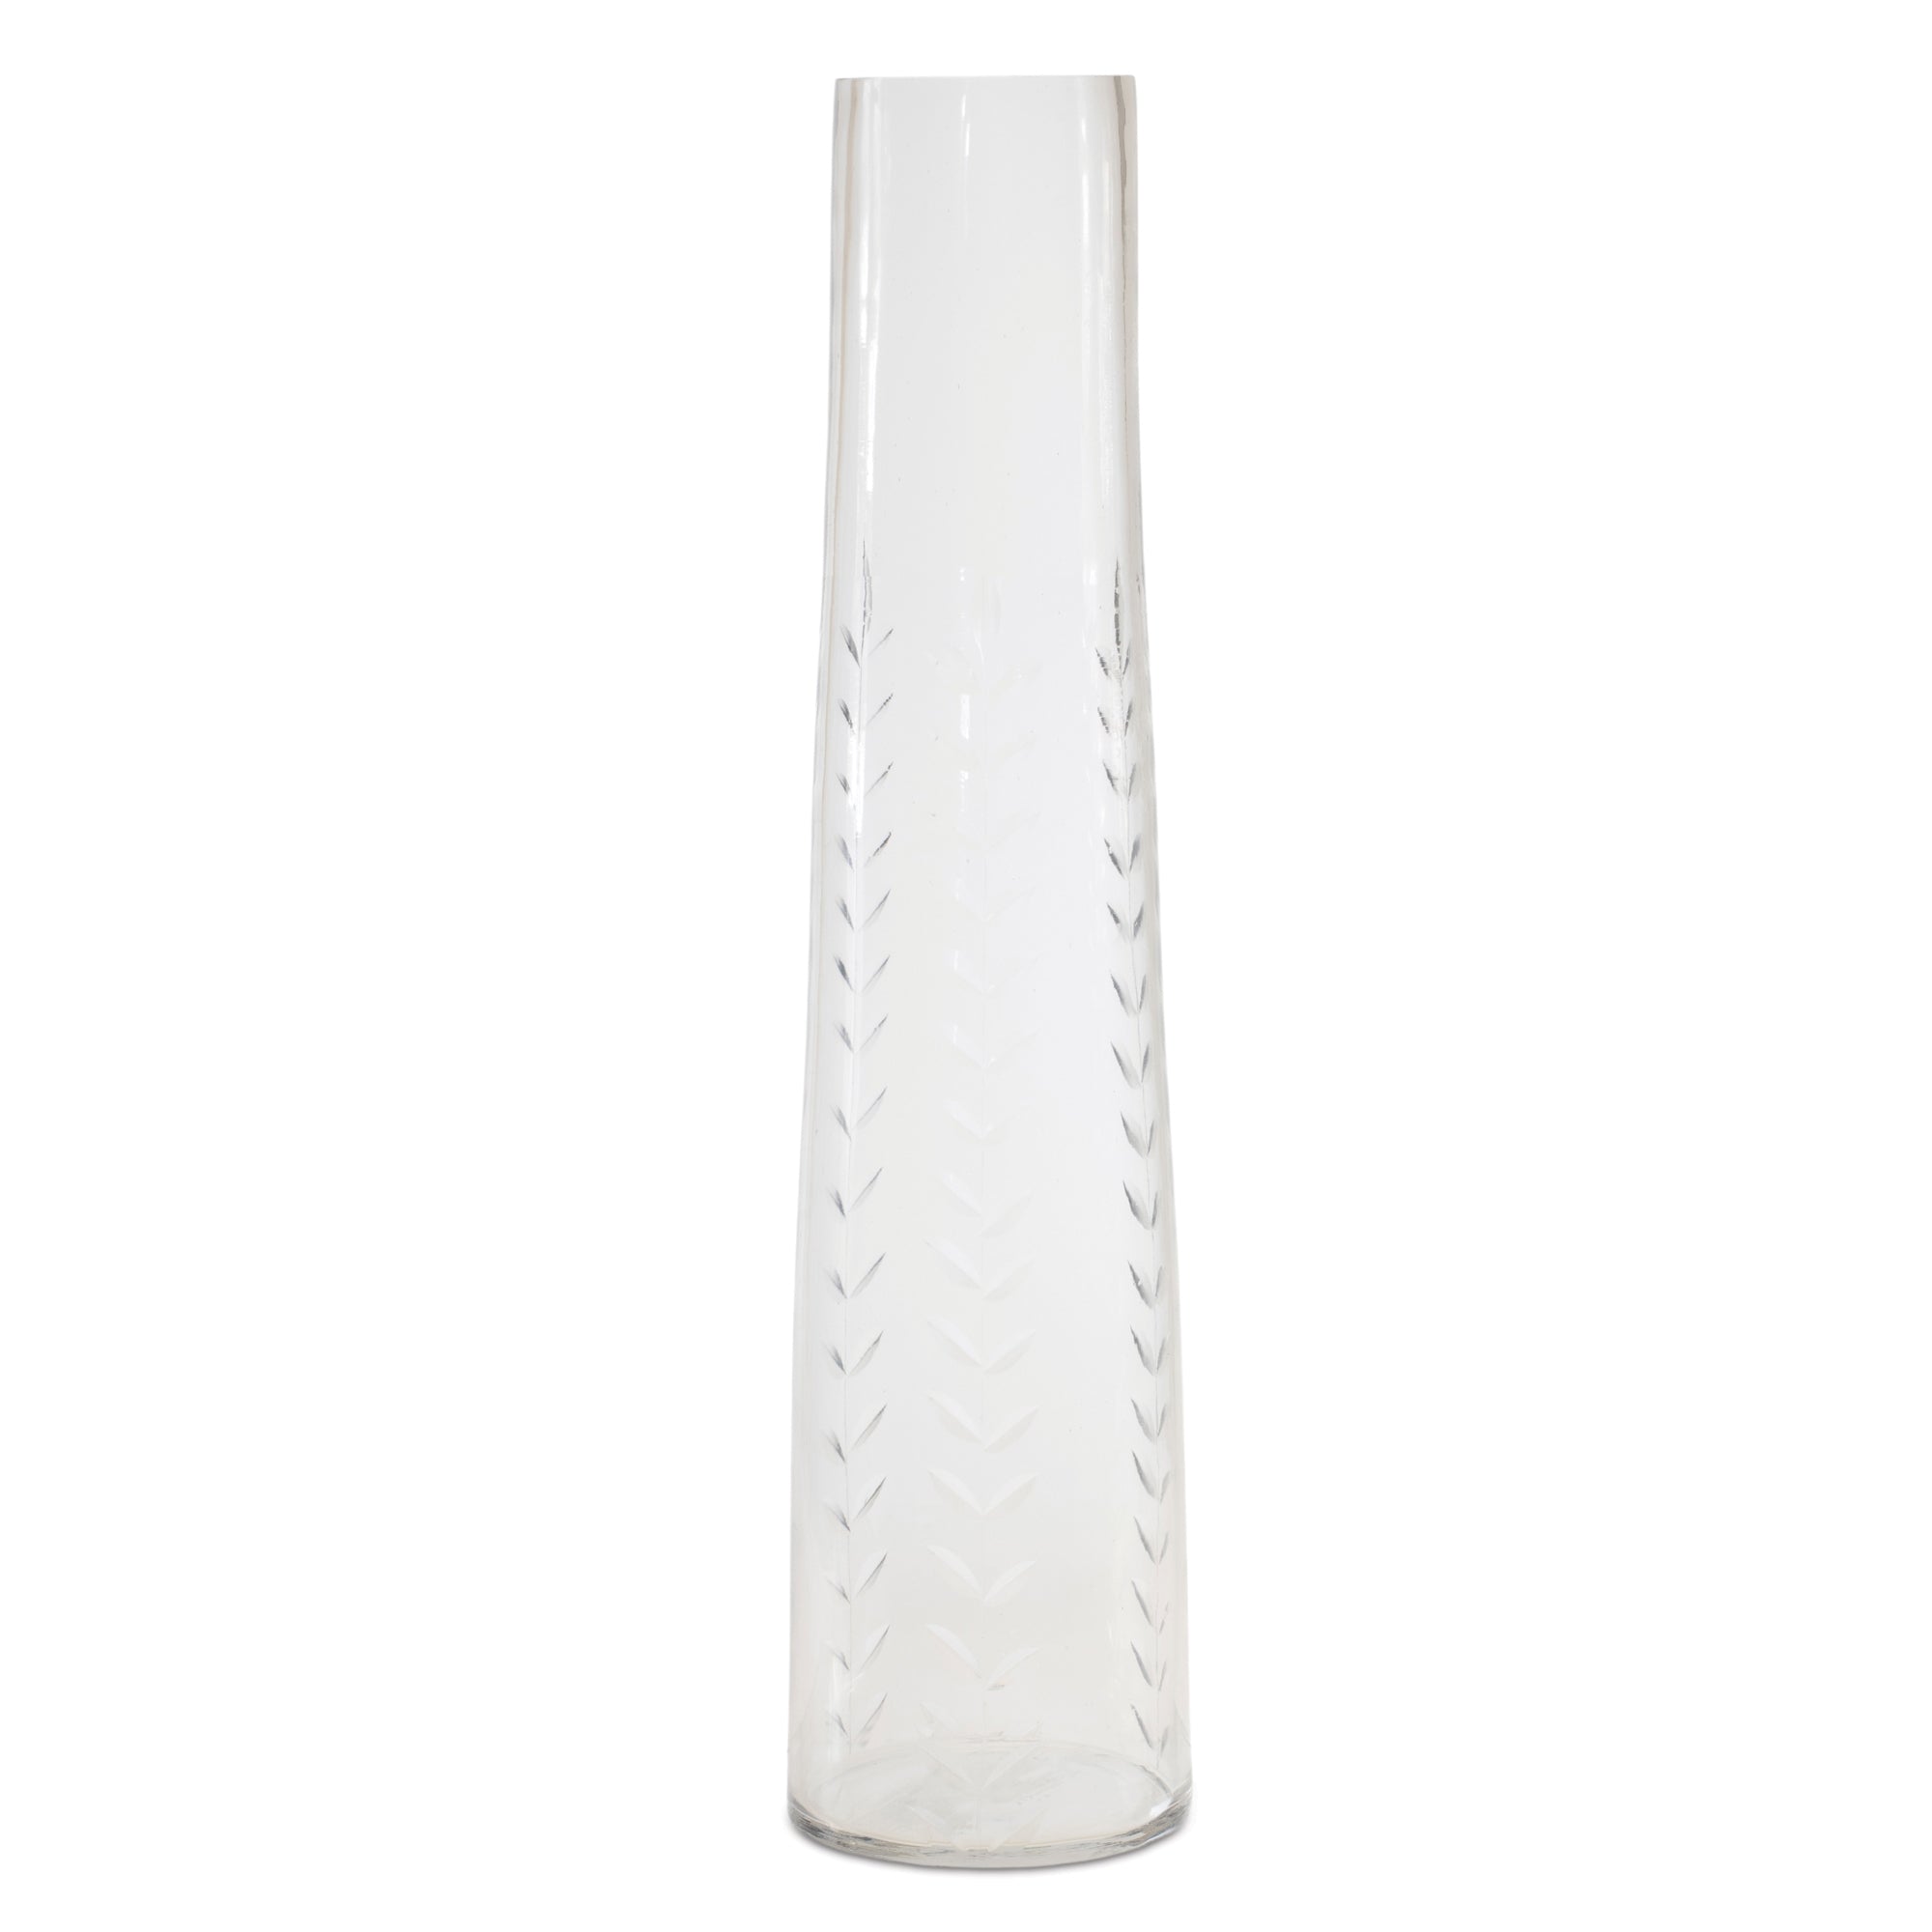 Etched Soda Lime Glass Vase 11.5"H